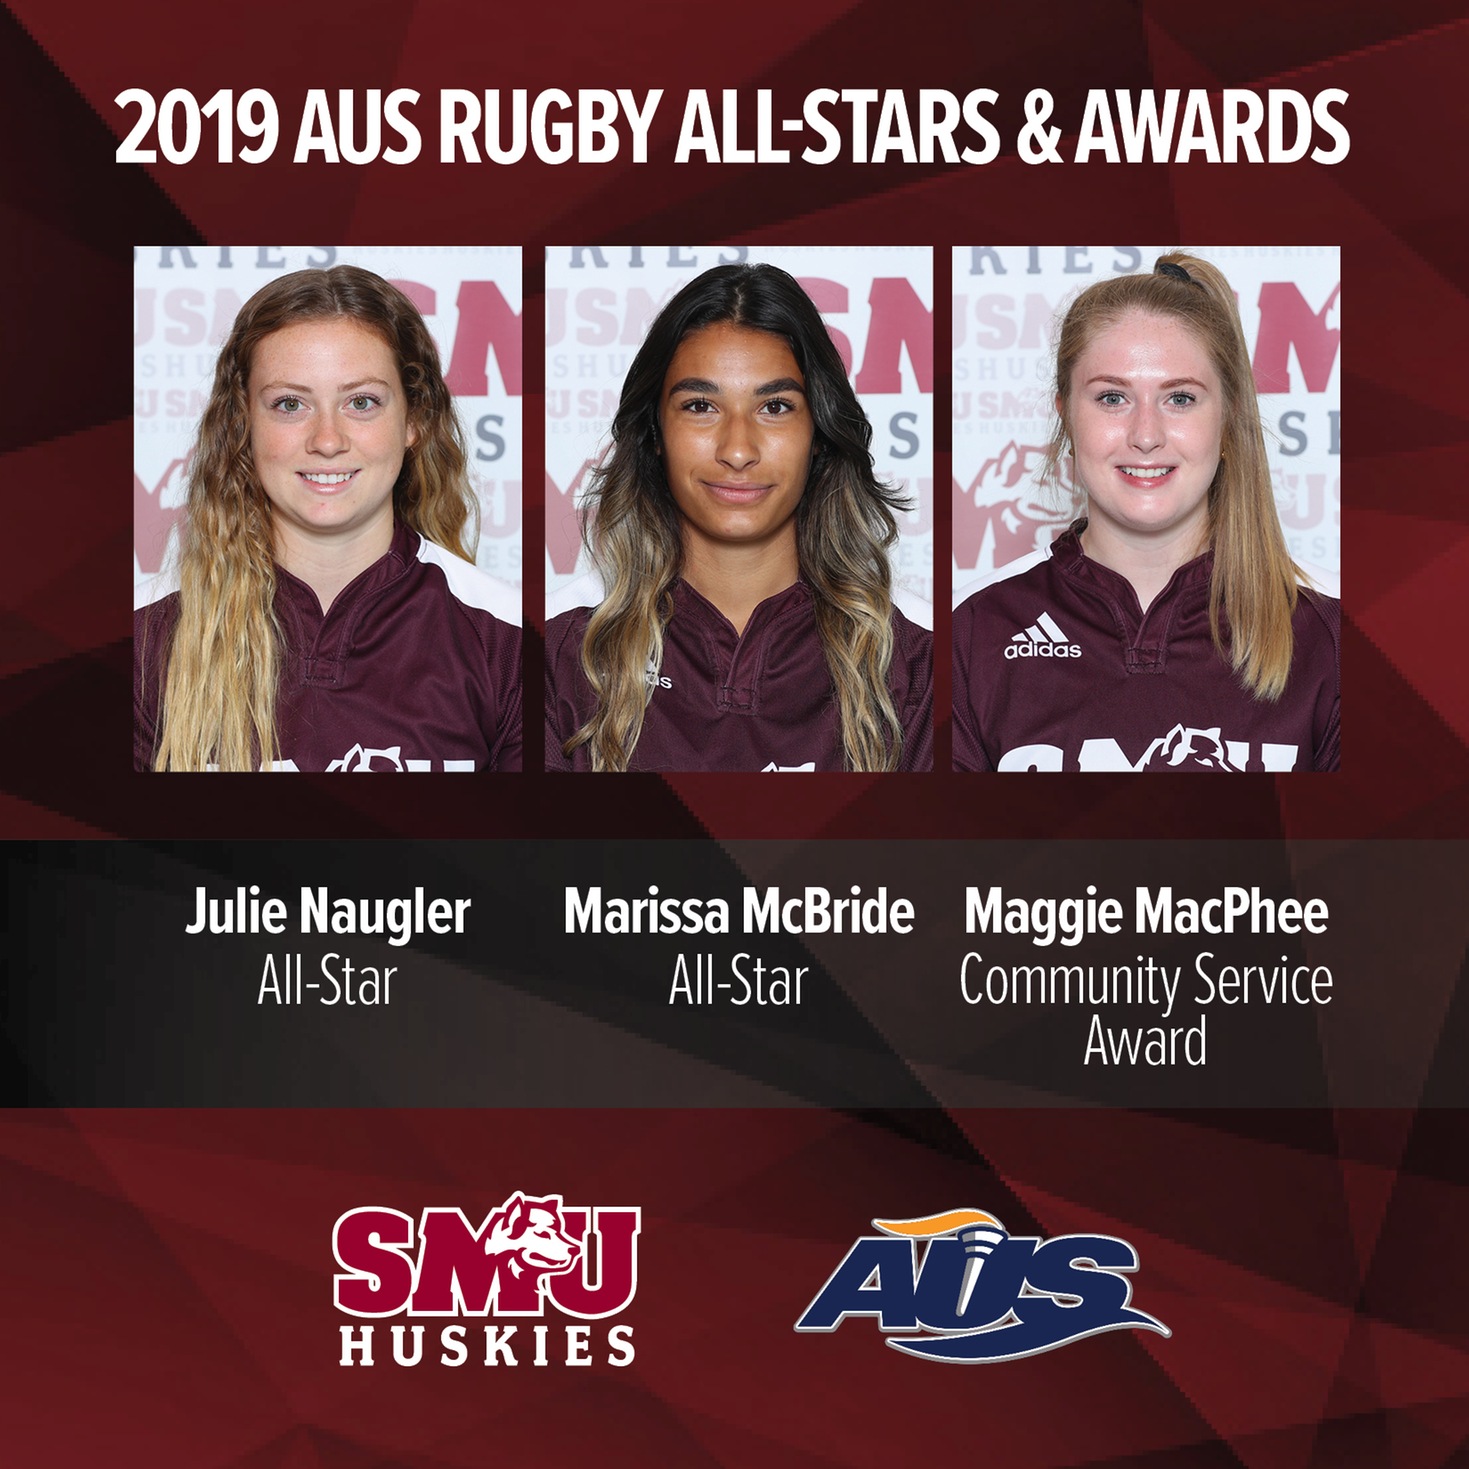 2019 AUS women's rugby major award winners and all-stars - Maggie MacPhee wins Community Service Award